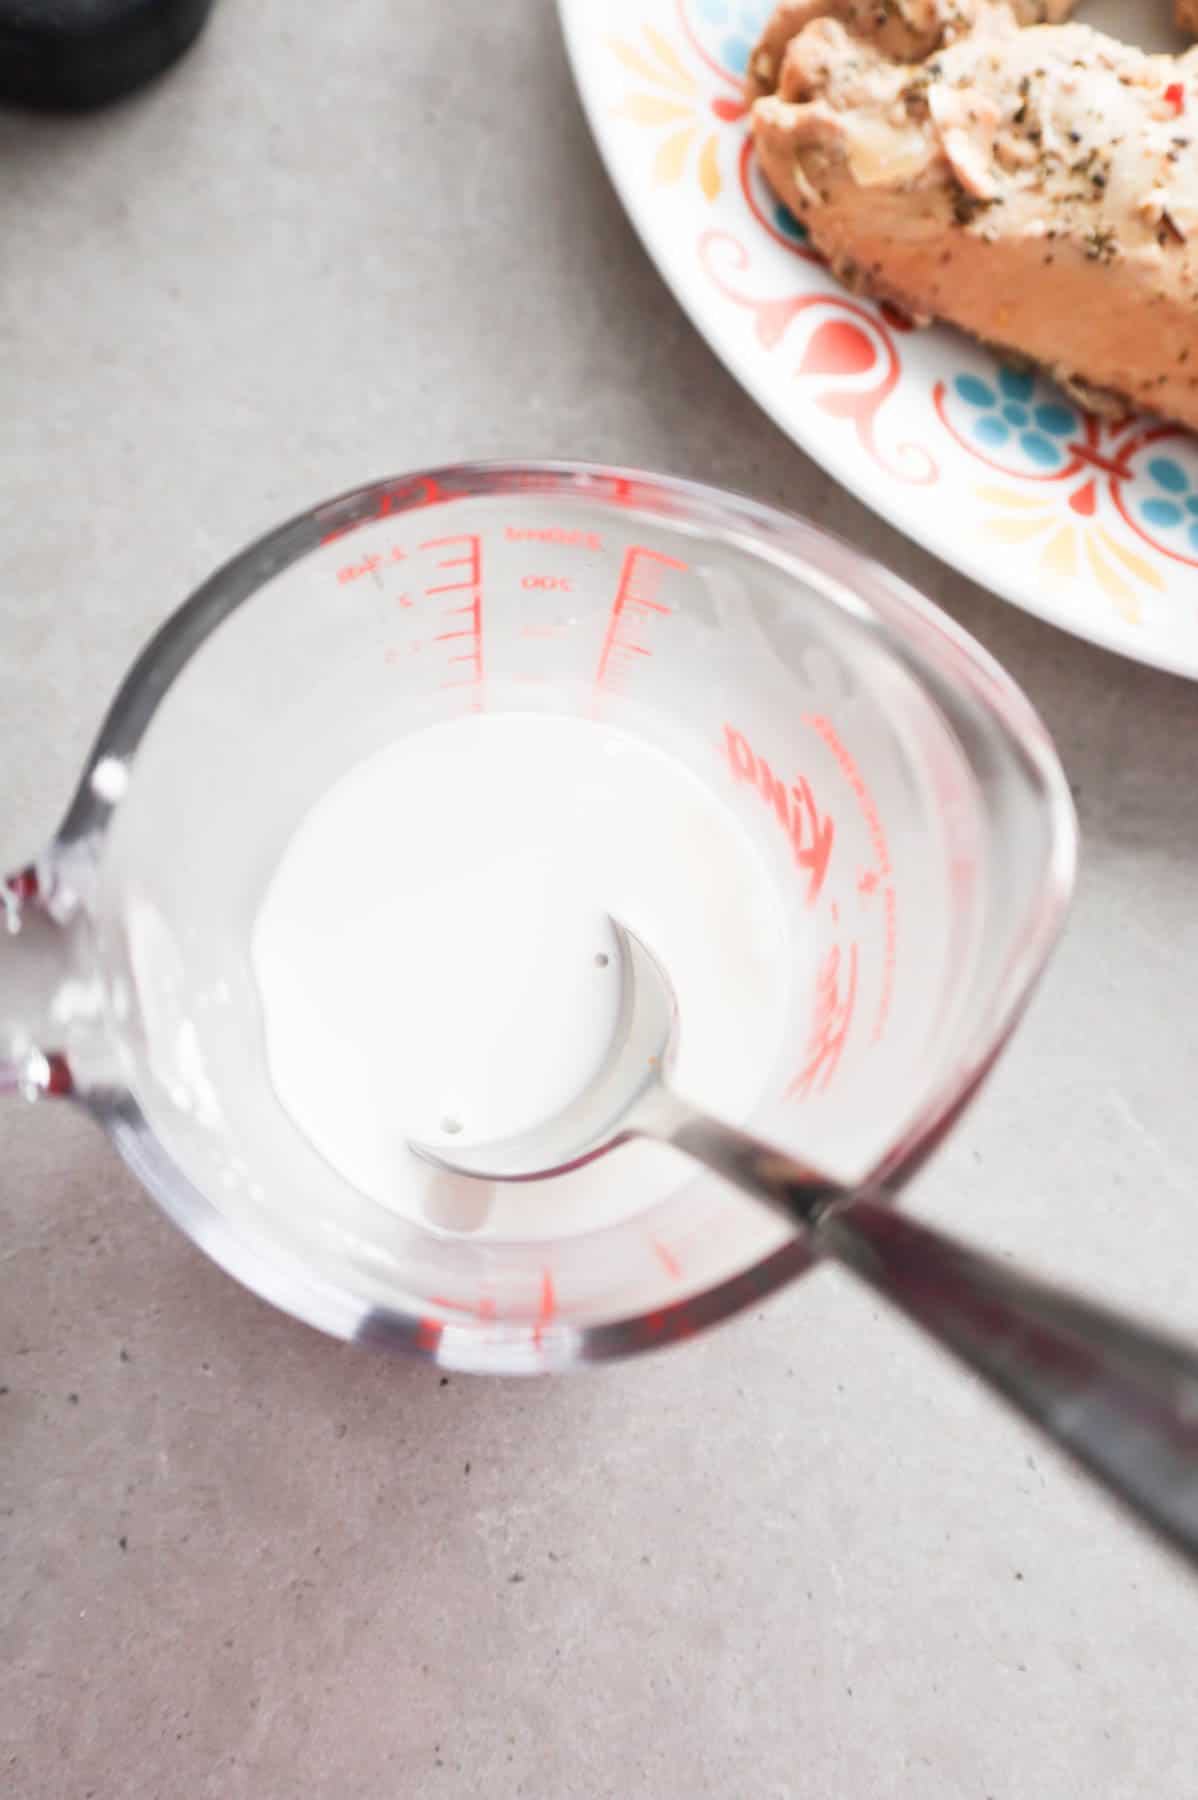 cornstarch flurry in a glass measuring cup